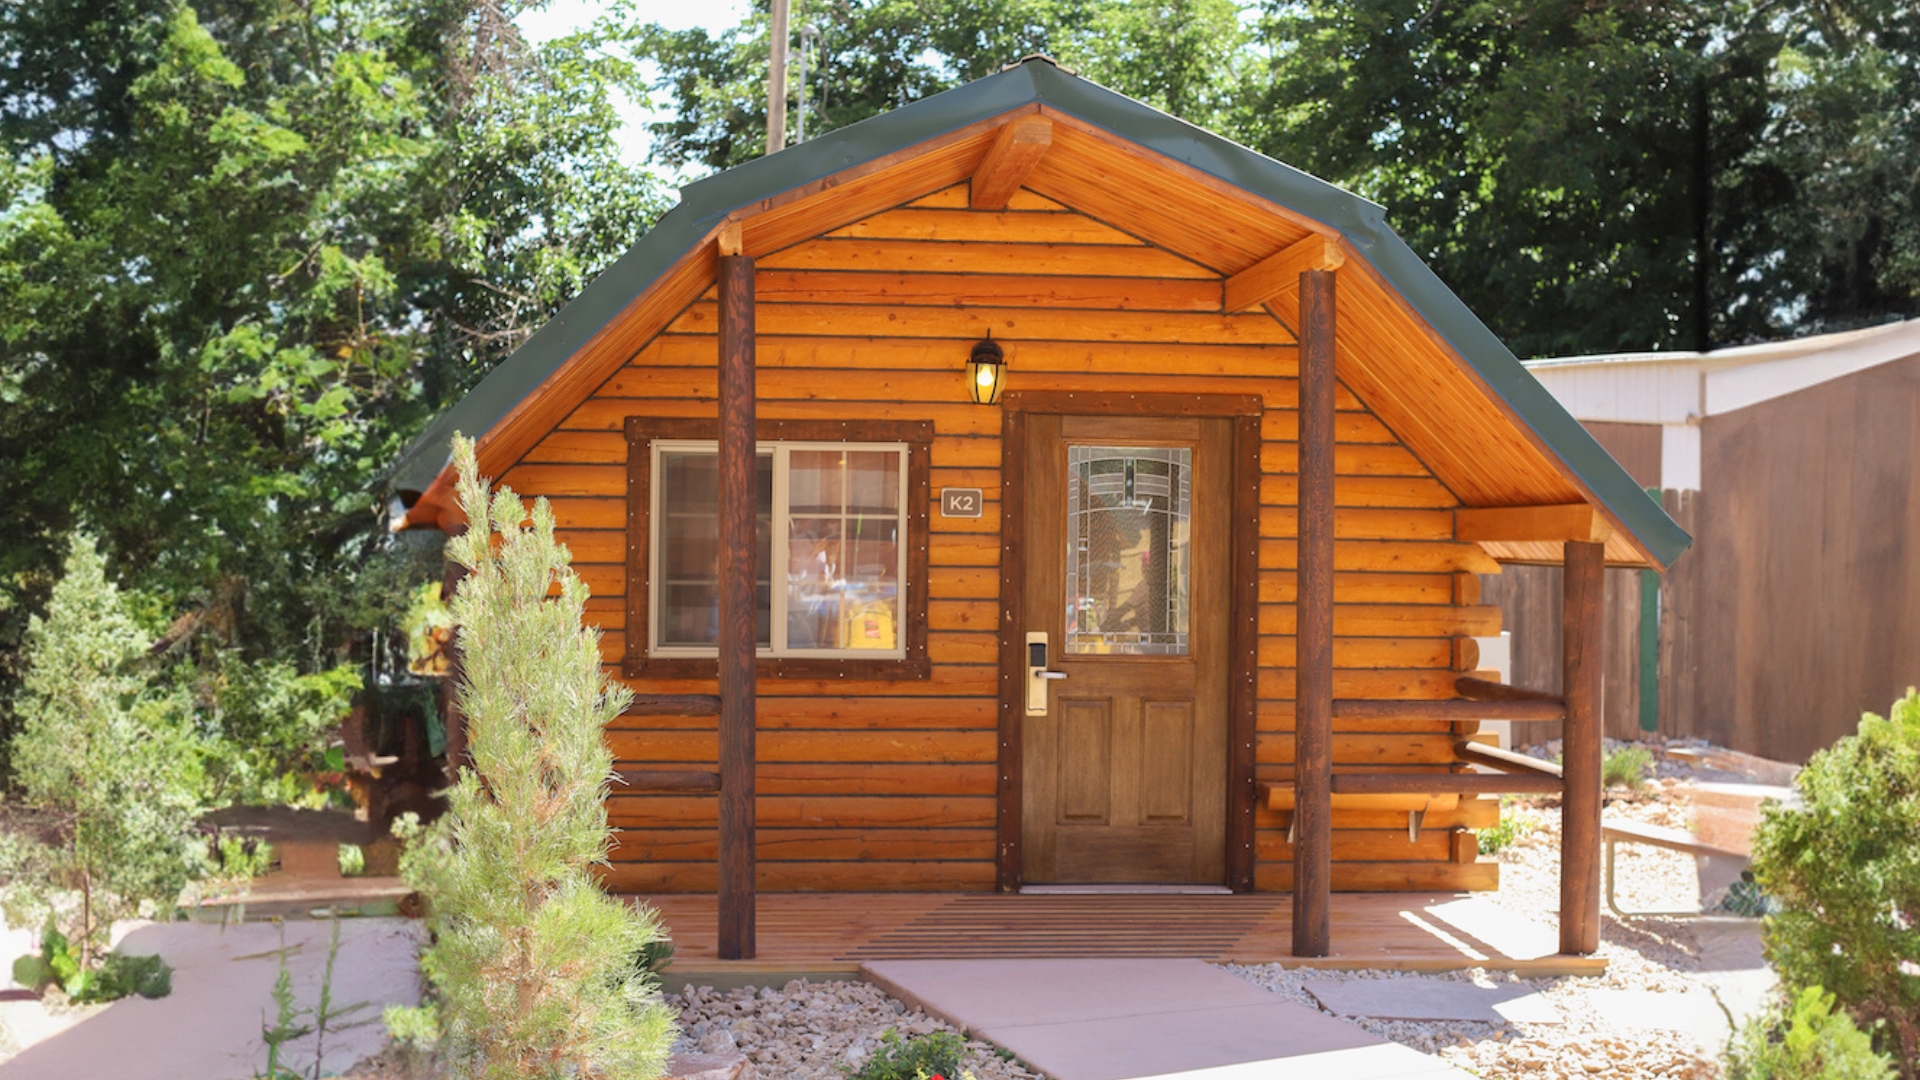 zion national park cabins